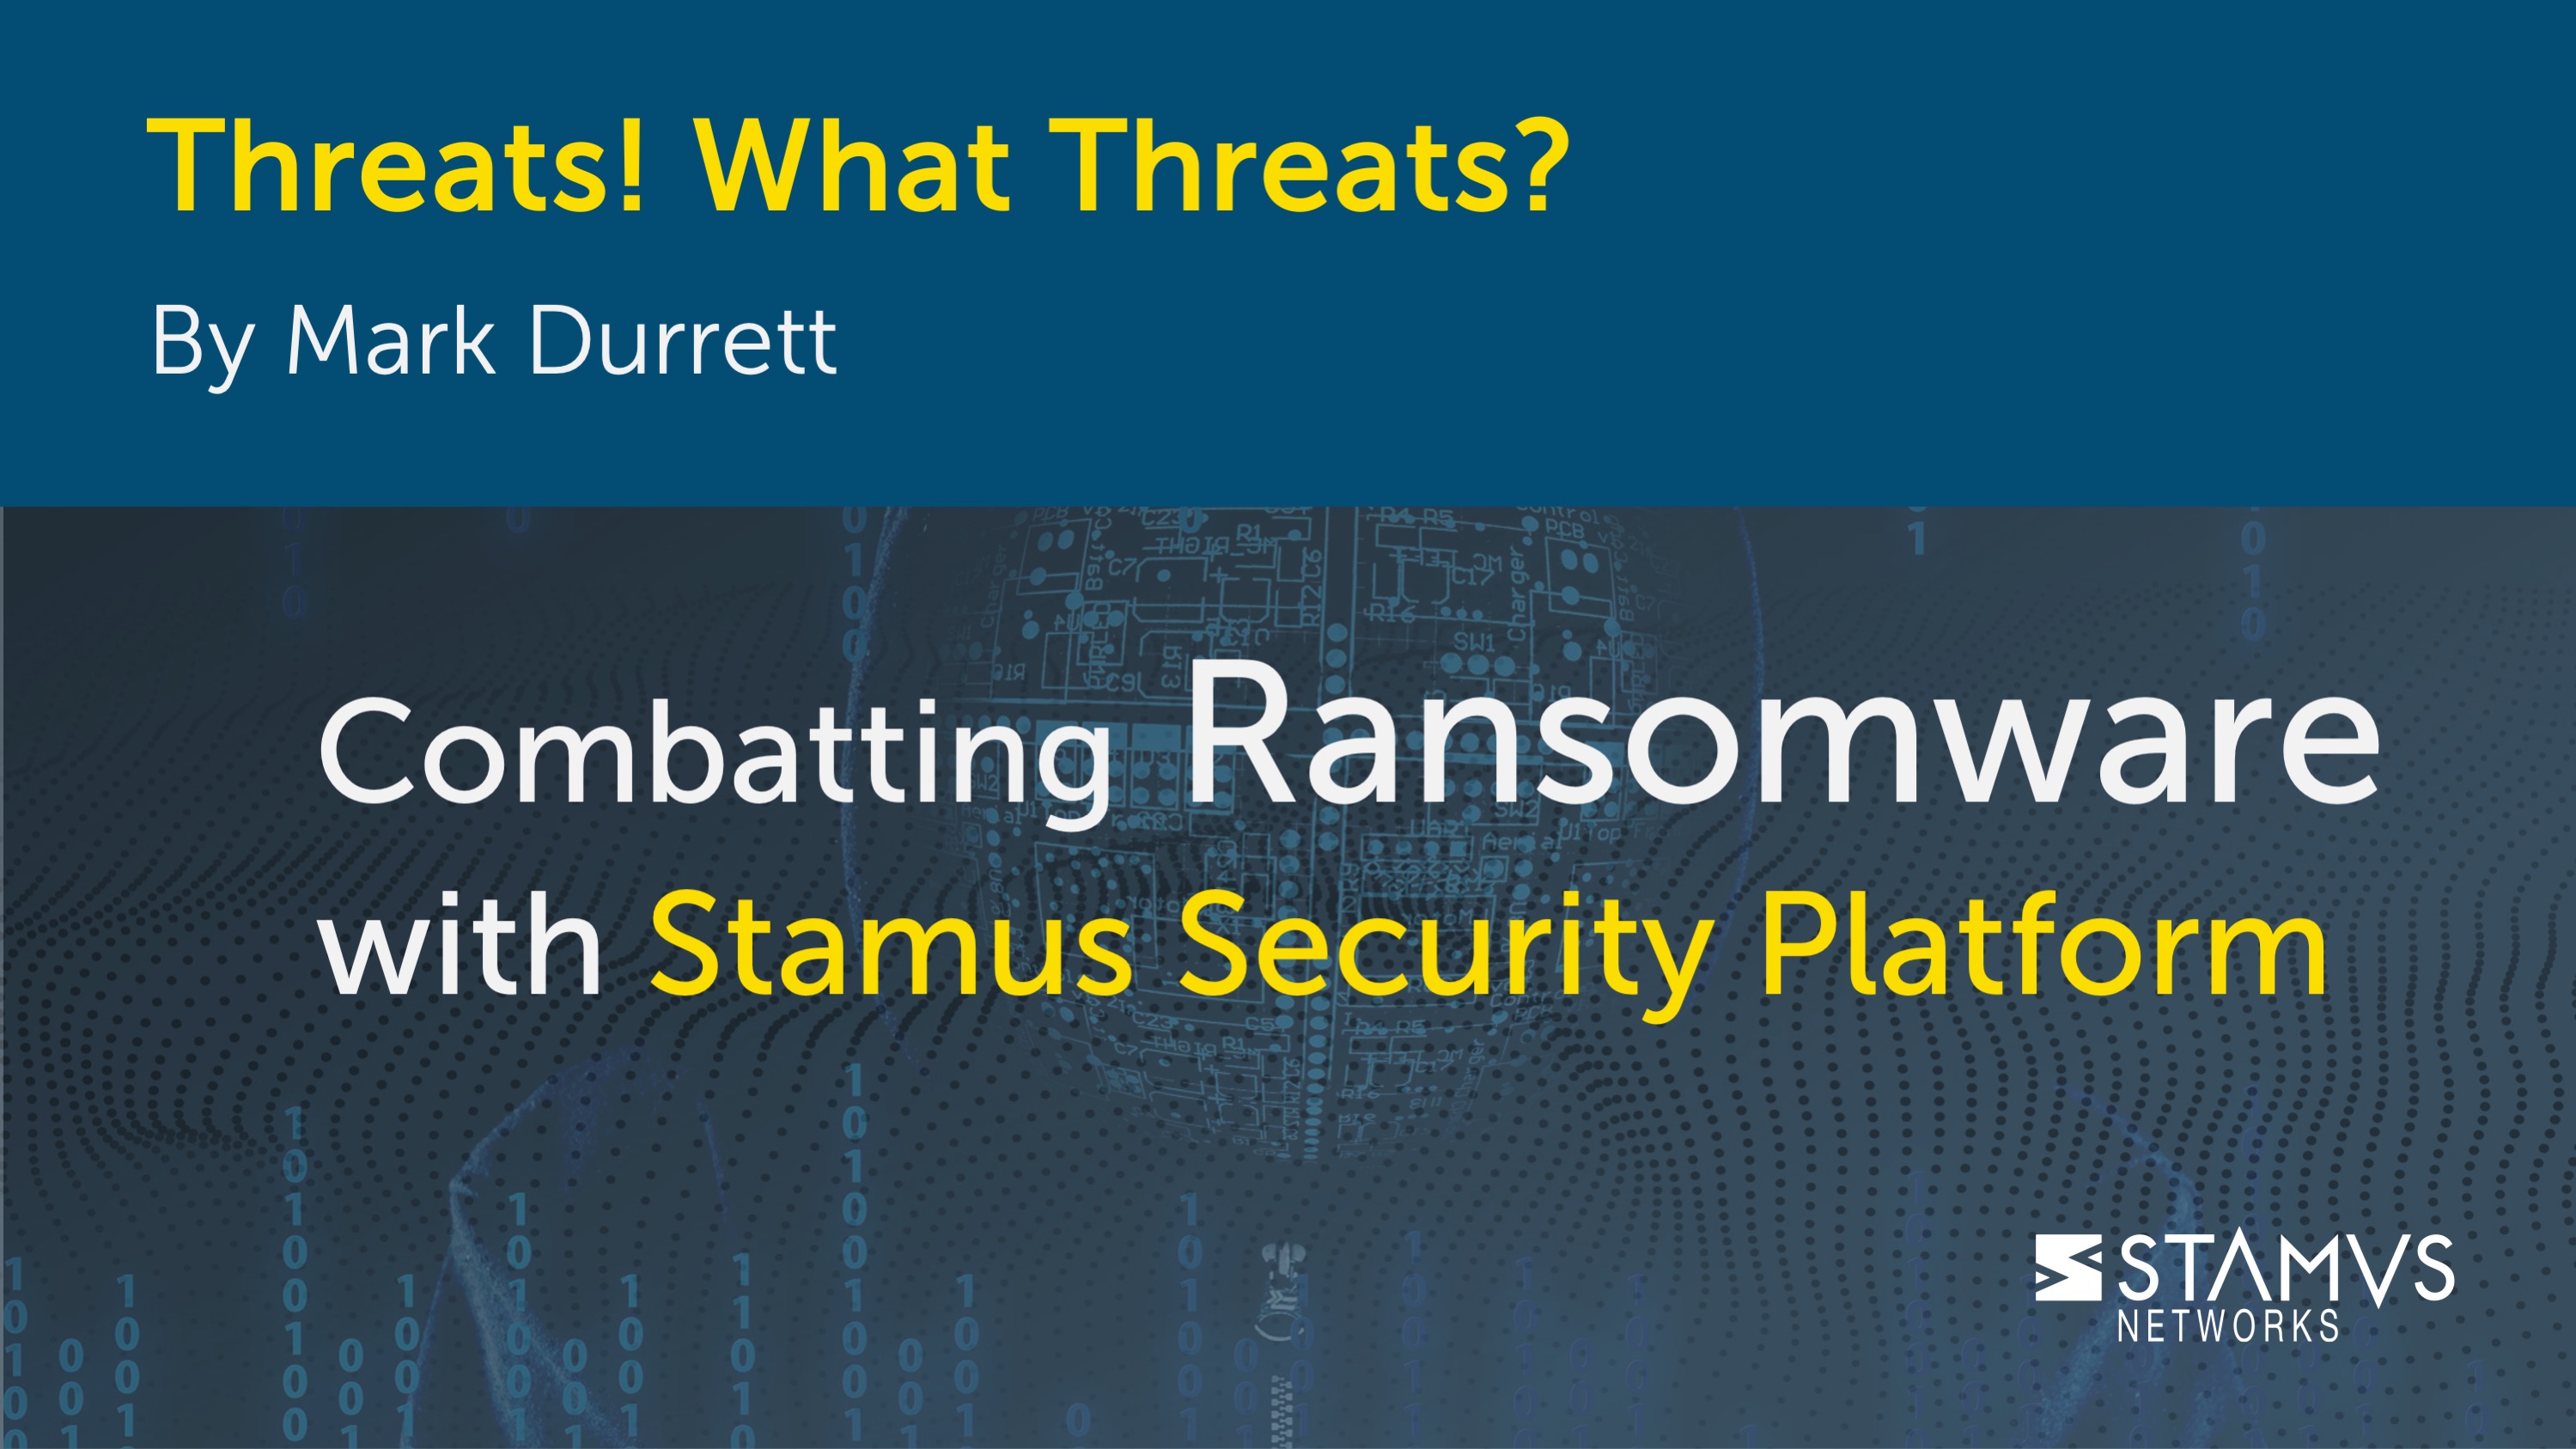 Combatting Ransomware with Stamus Security Platform